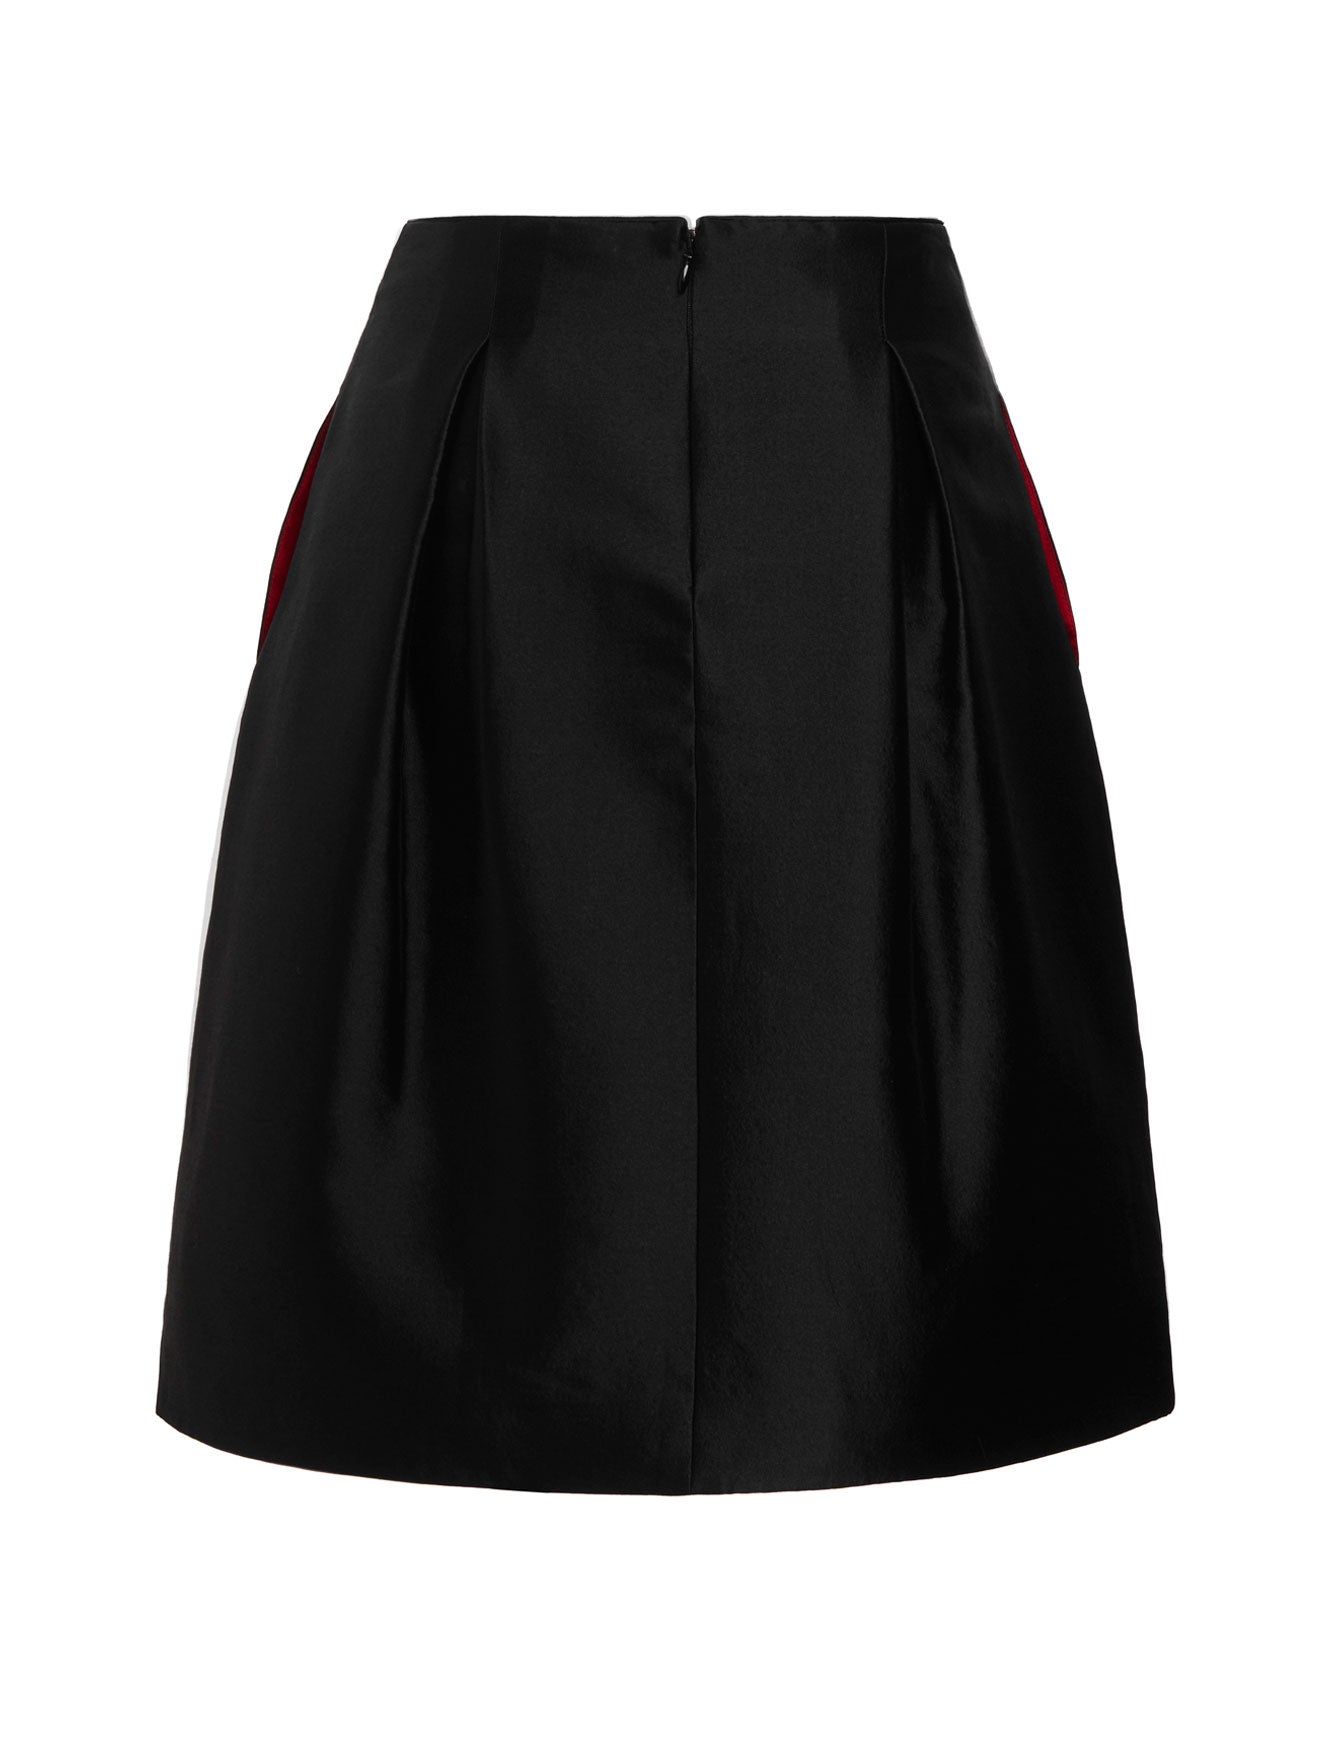 Classic A-line Skirt with Pockets — The Diana - Senza Tempo Fashion